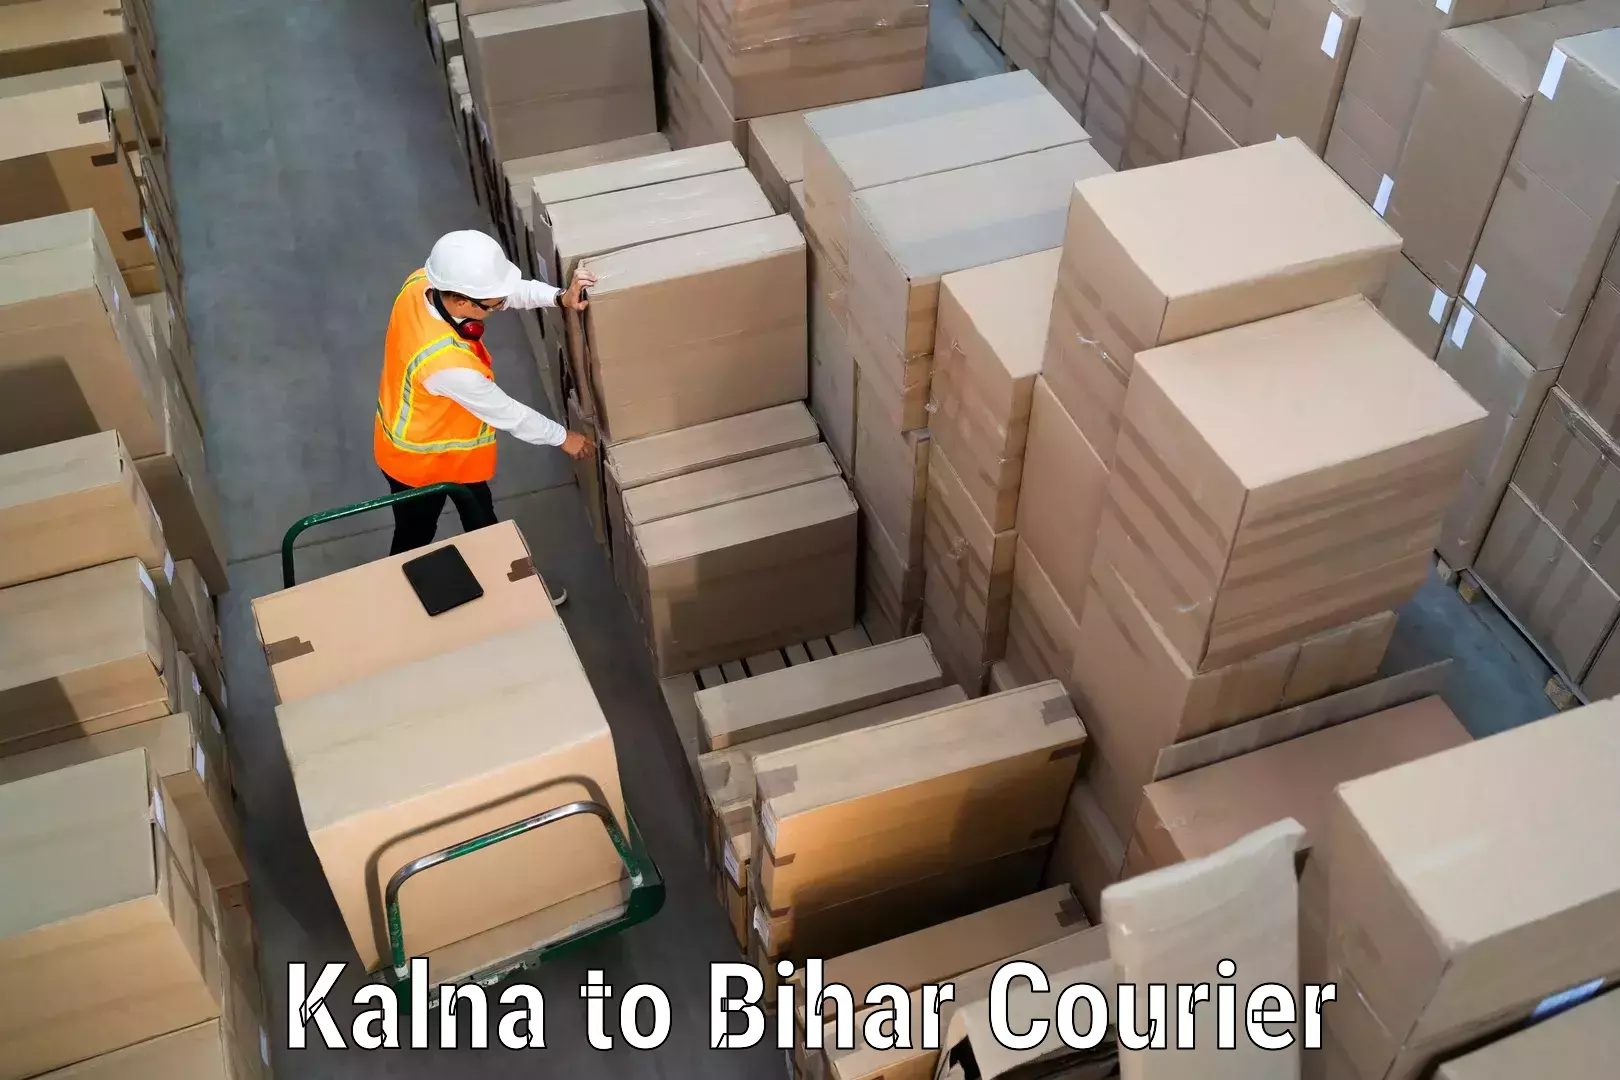 Courier service efficiency Kalna to Bihar